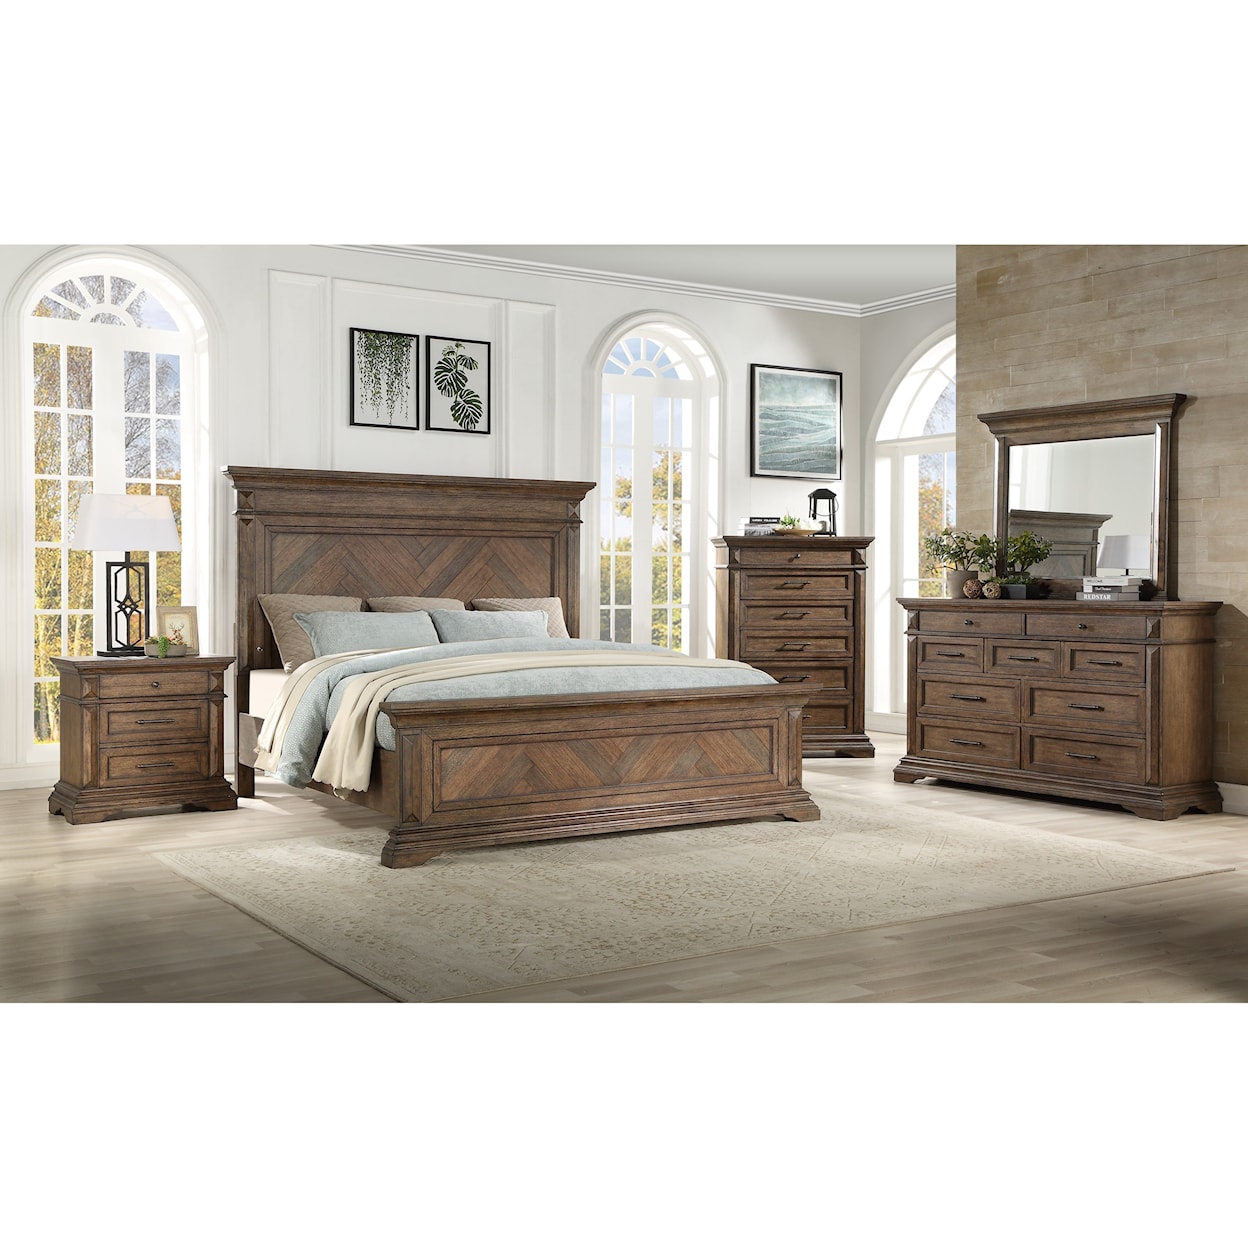 New Classic Furniture Mar Vista King Bedroom Group